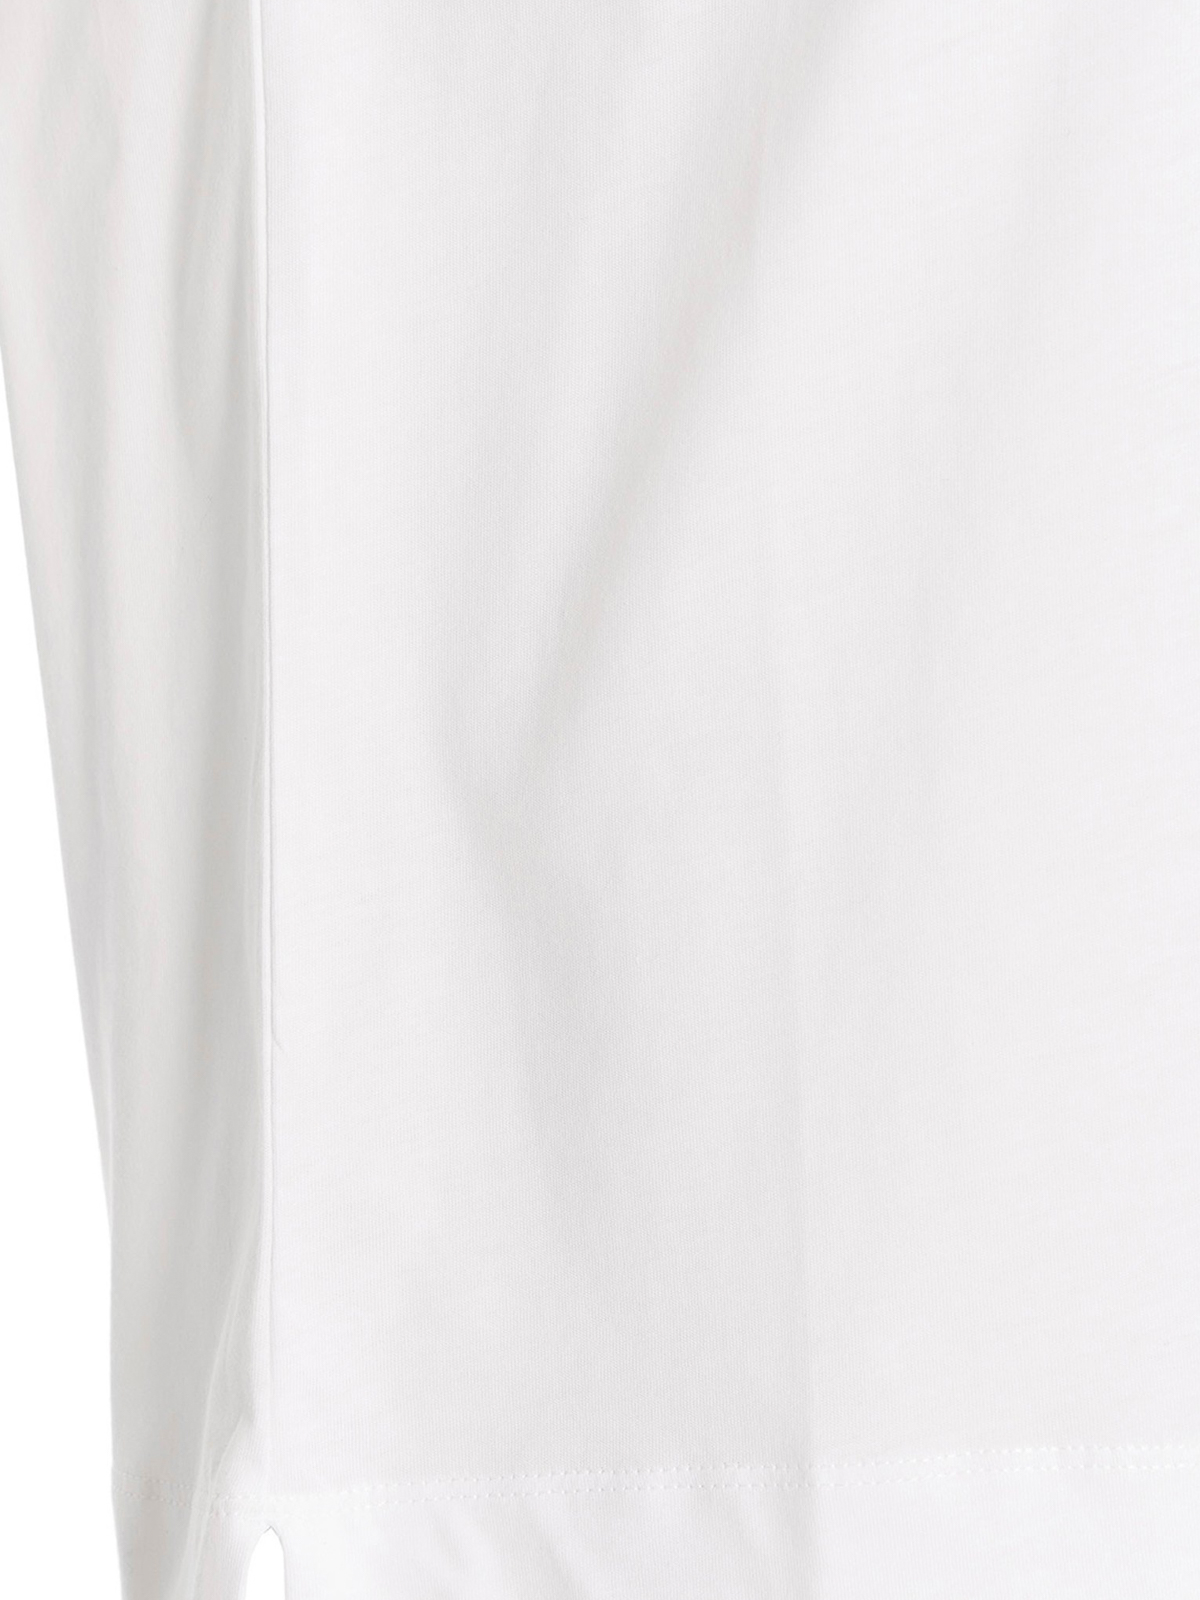 Shop Zegna Camiseta - Blanco In White